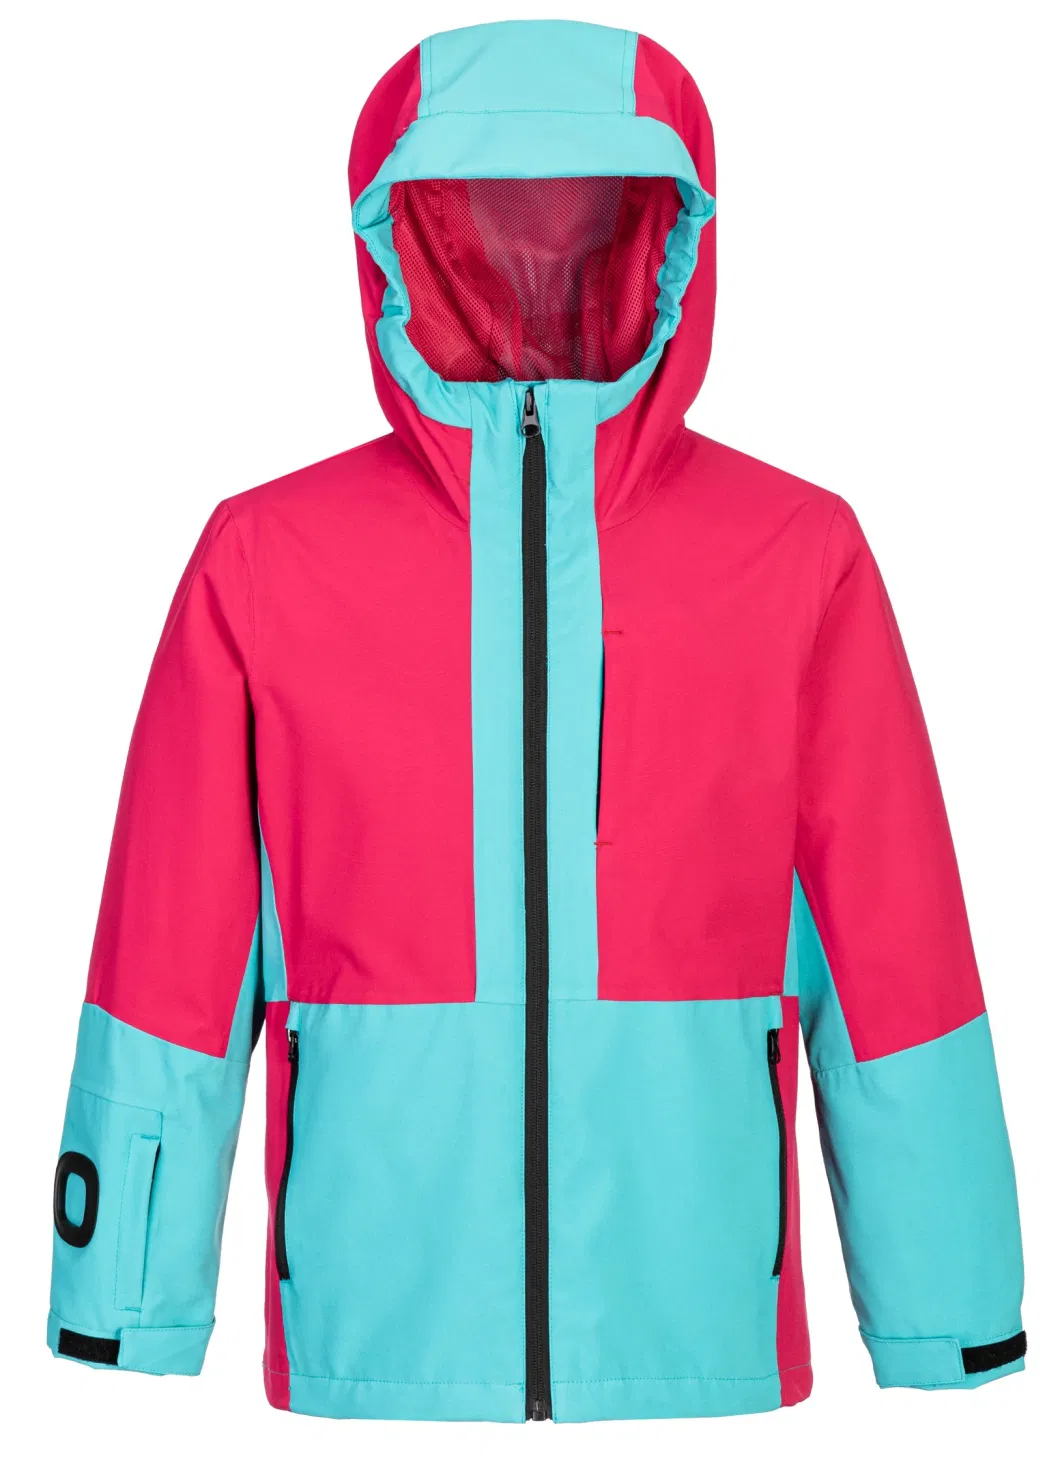 Custom Children Apparel Clothing Outdoor Travel Windproof Kids Jacket for Sports Wear